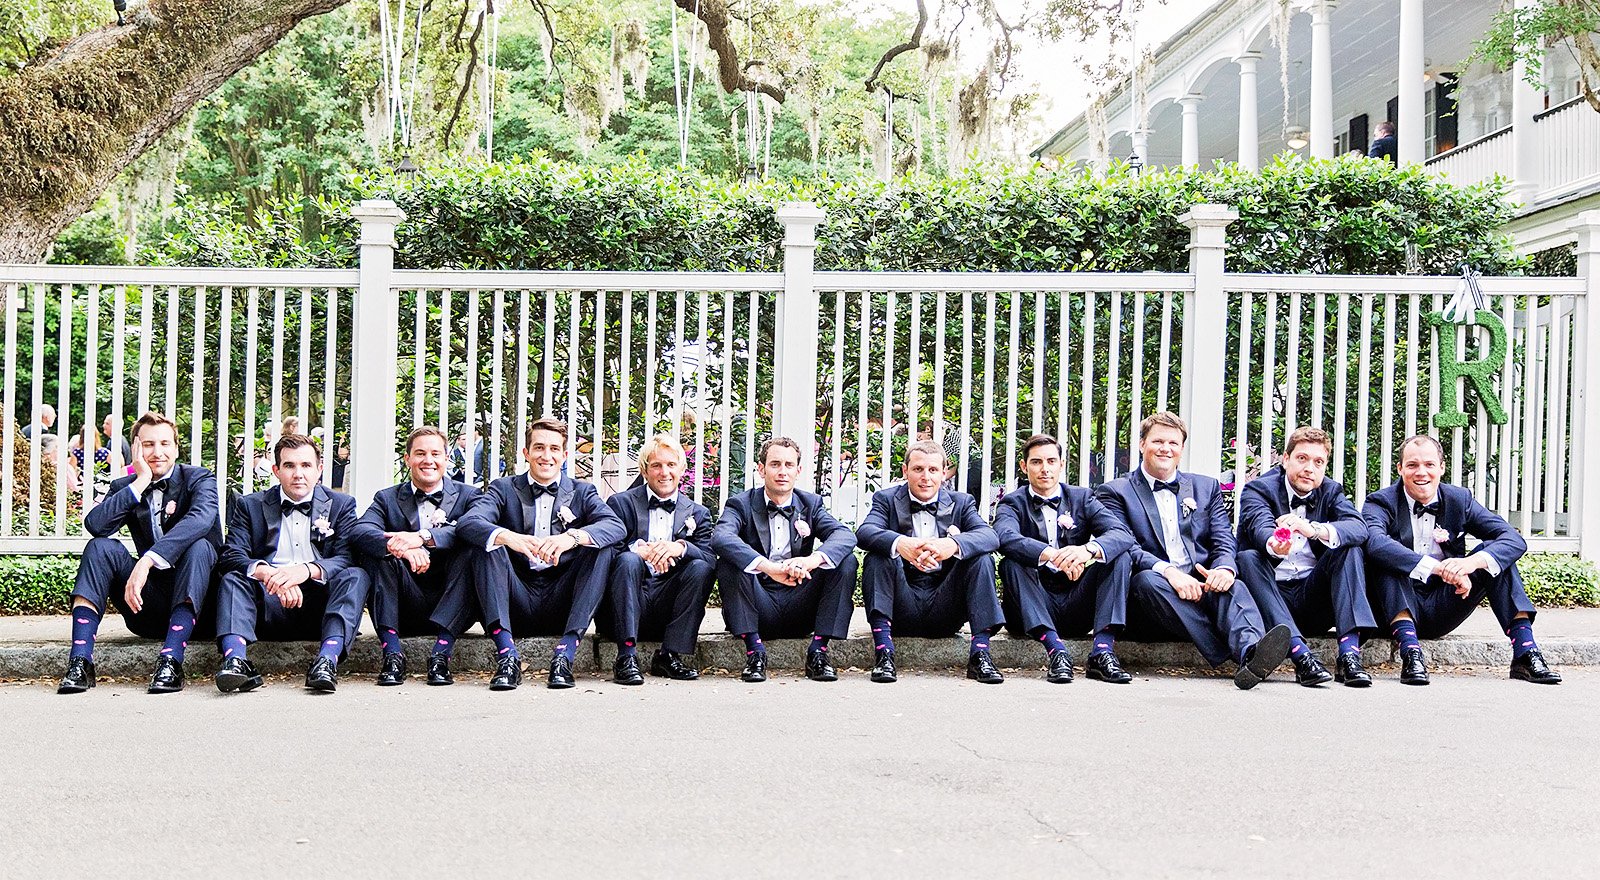 Groomsmen suits for wedding in Charleston